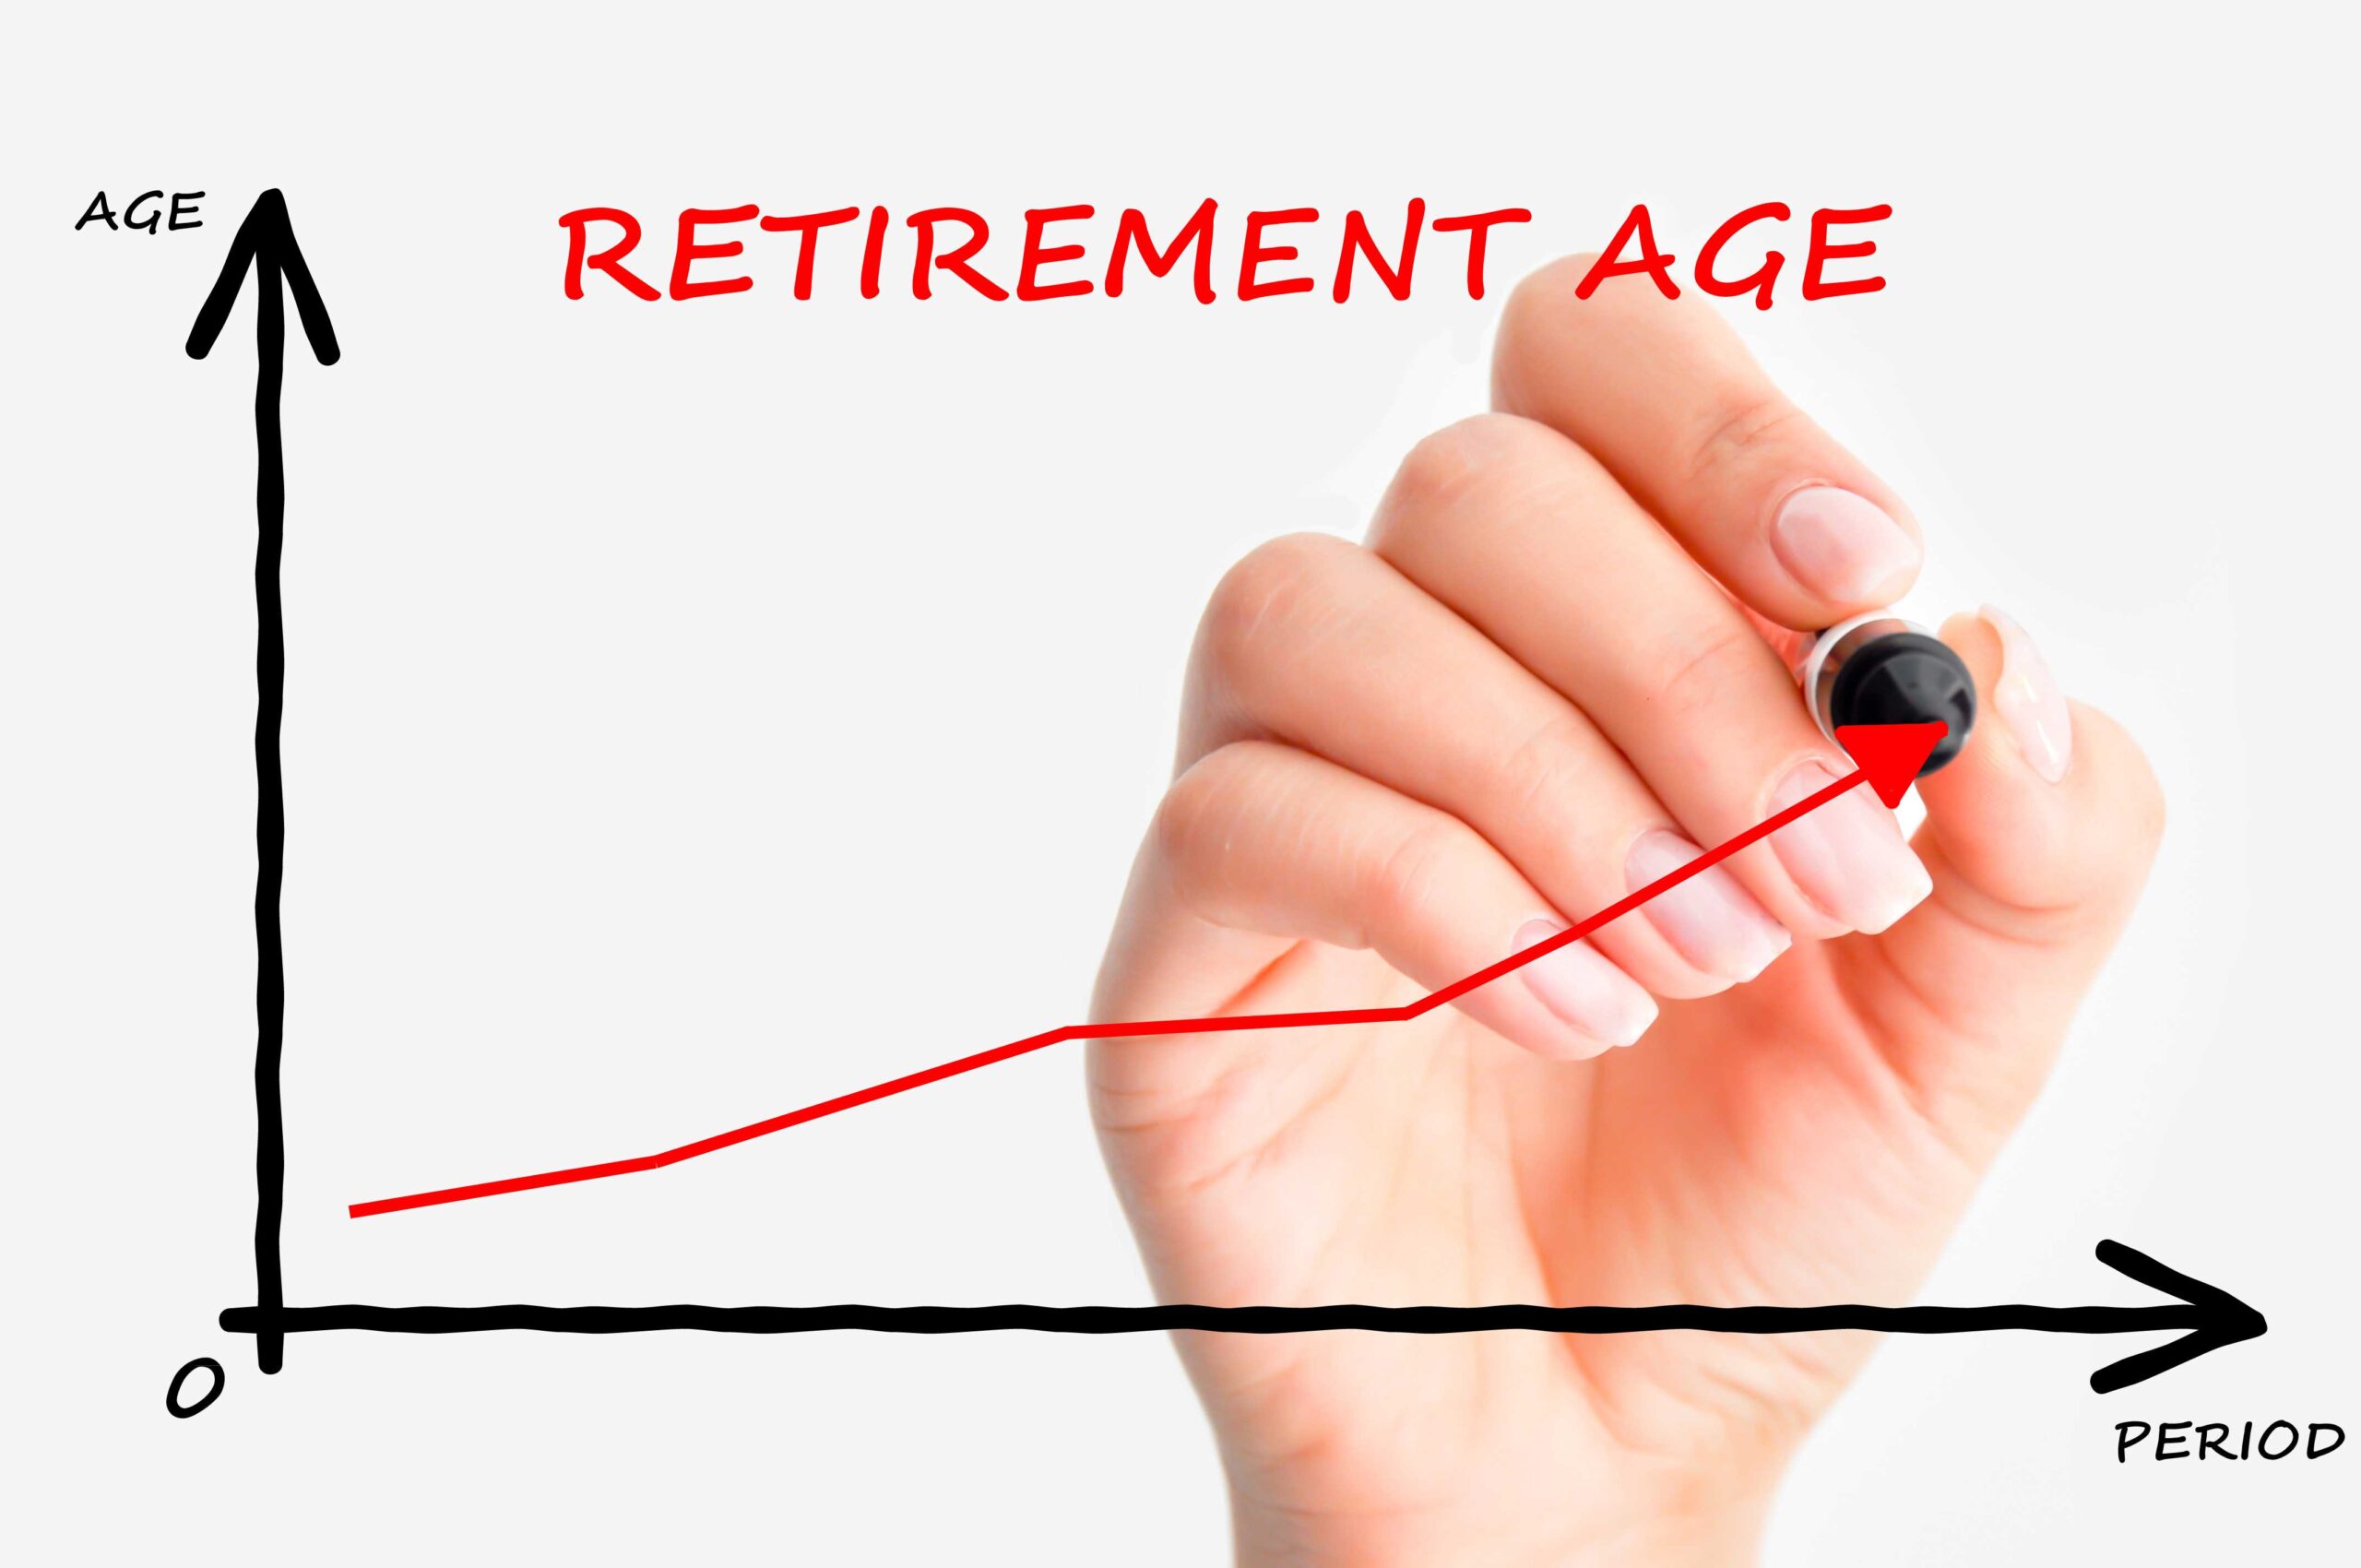 Working to 72? The retirement procrastination problem